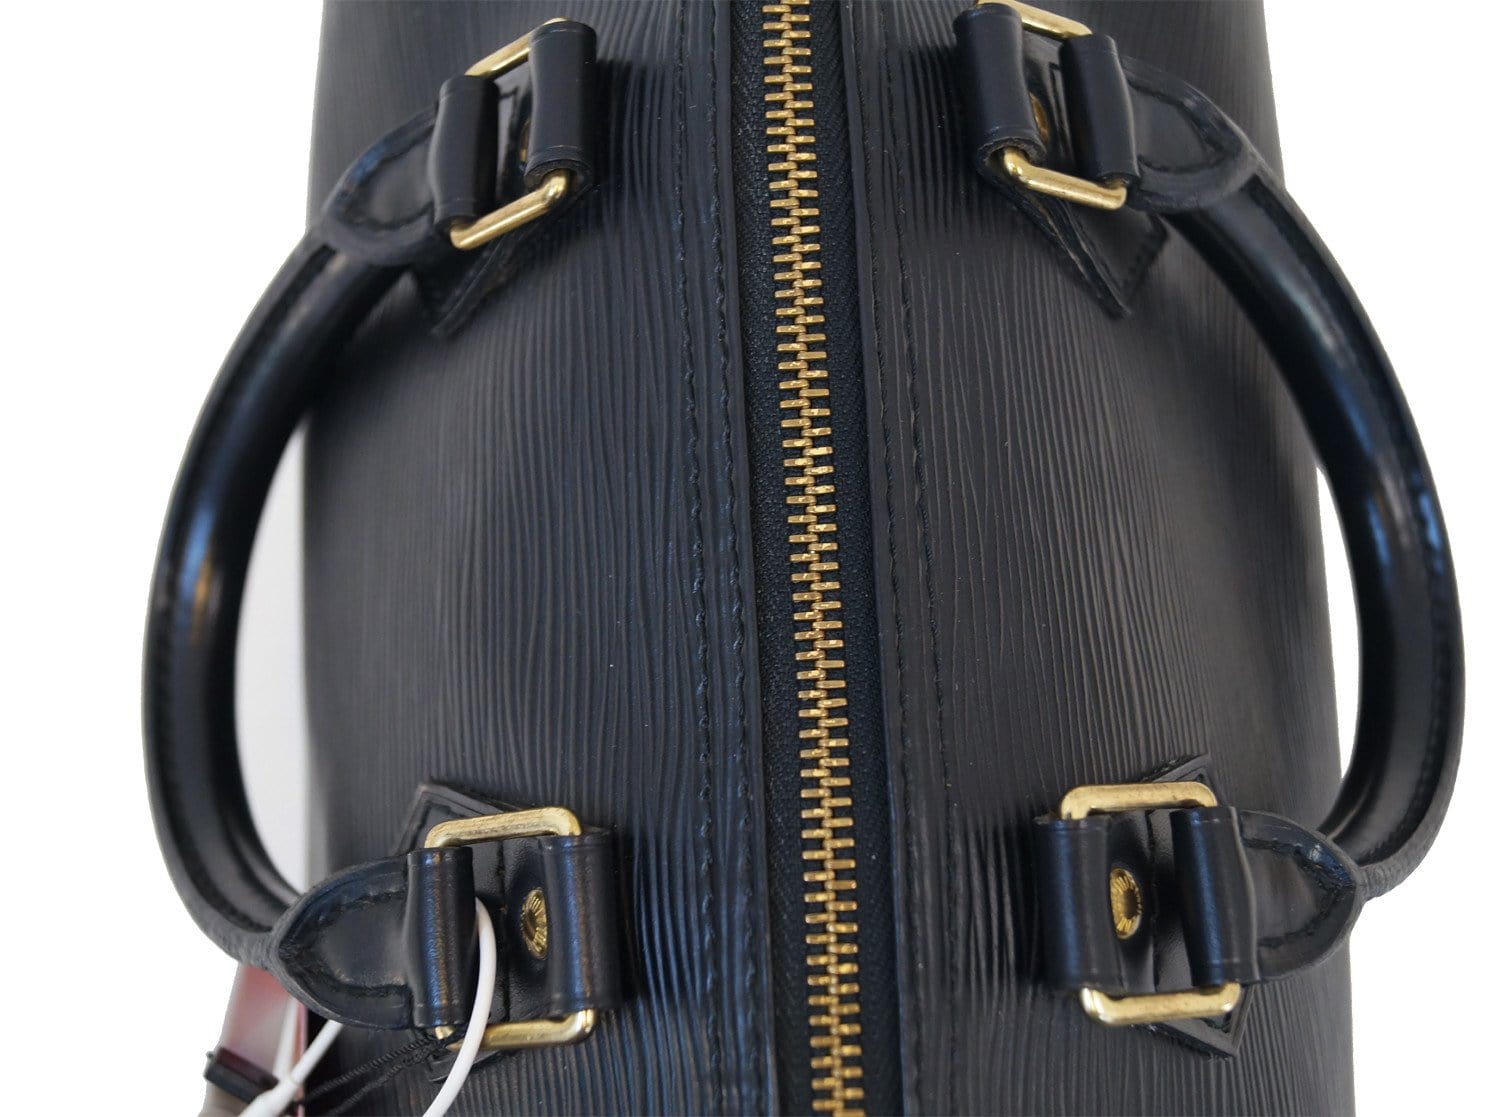 Louis Vuitton Speedy Epi blue Handbag Used (6139)